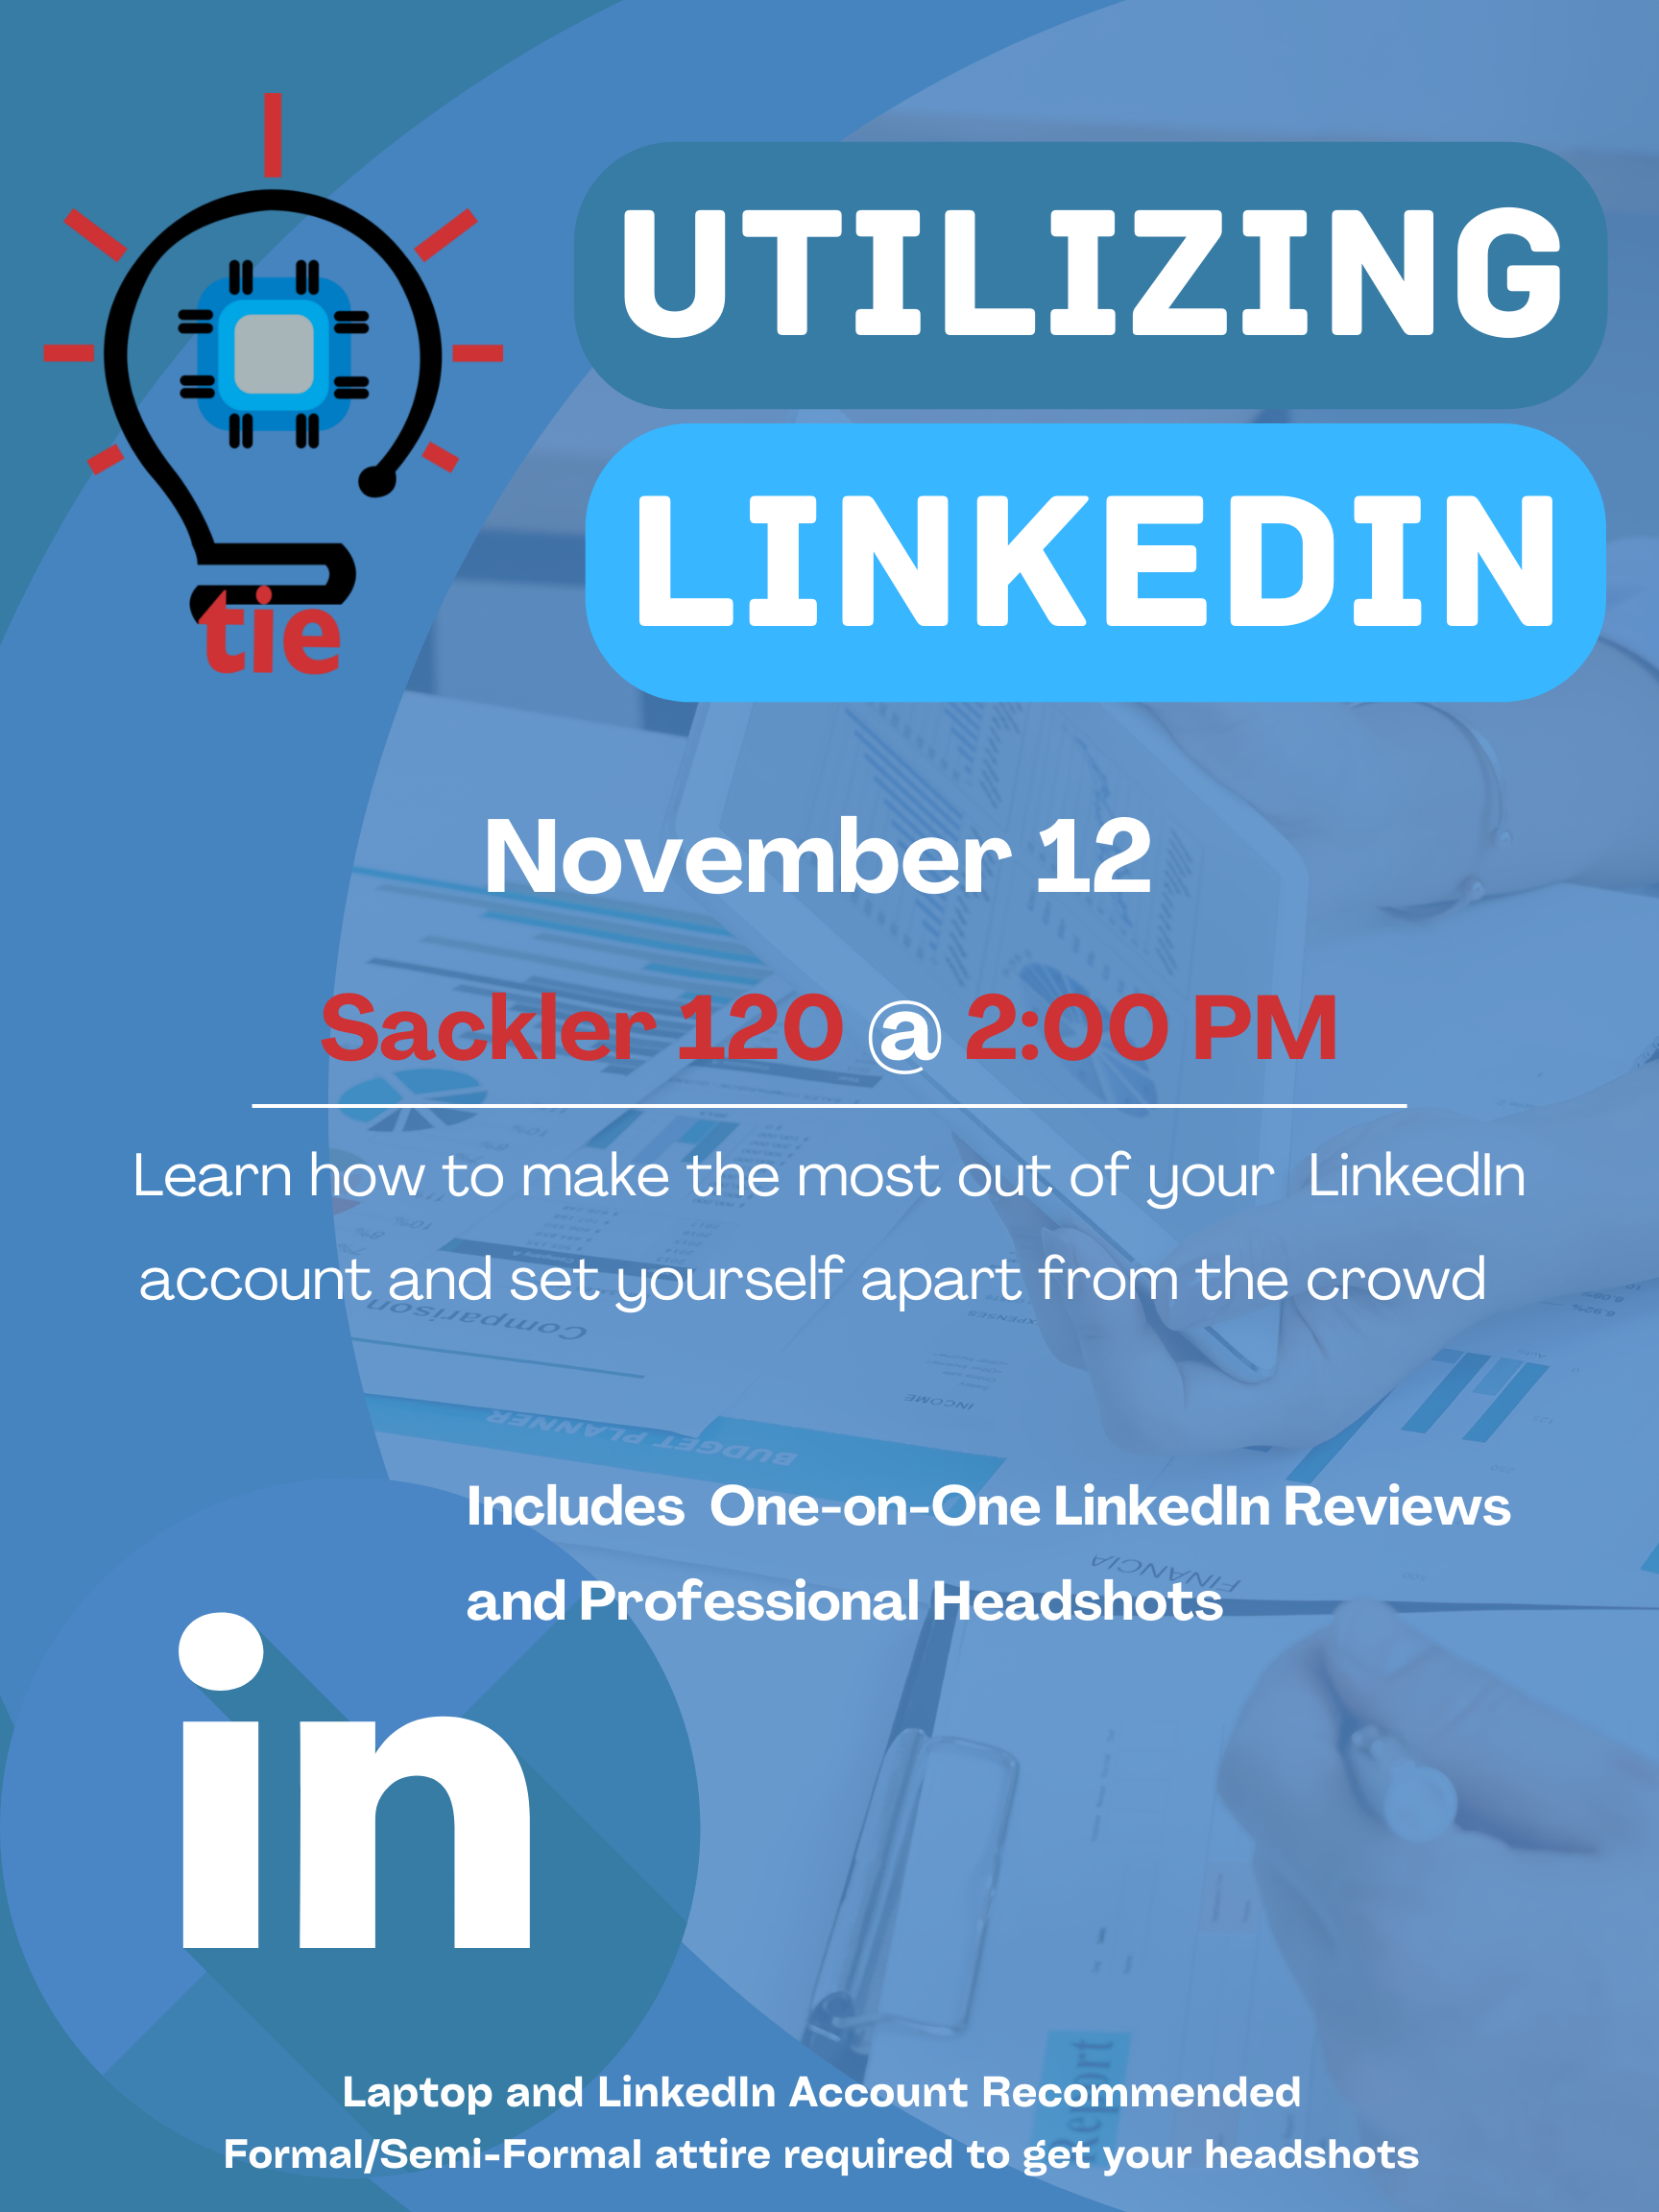 Flyet for LinkedIn Workshop by ClarkTIE on November 12th from 2:00 PM in Sackler 120